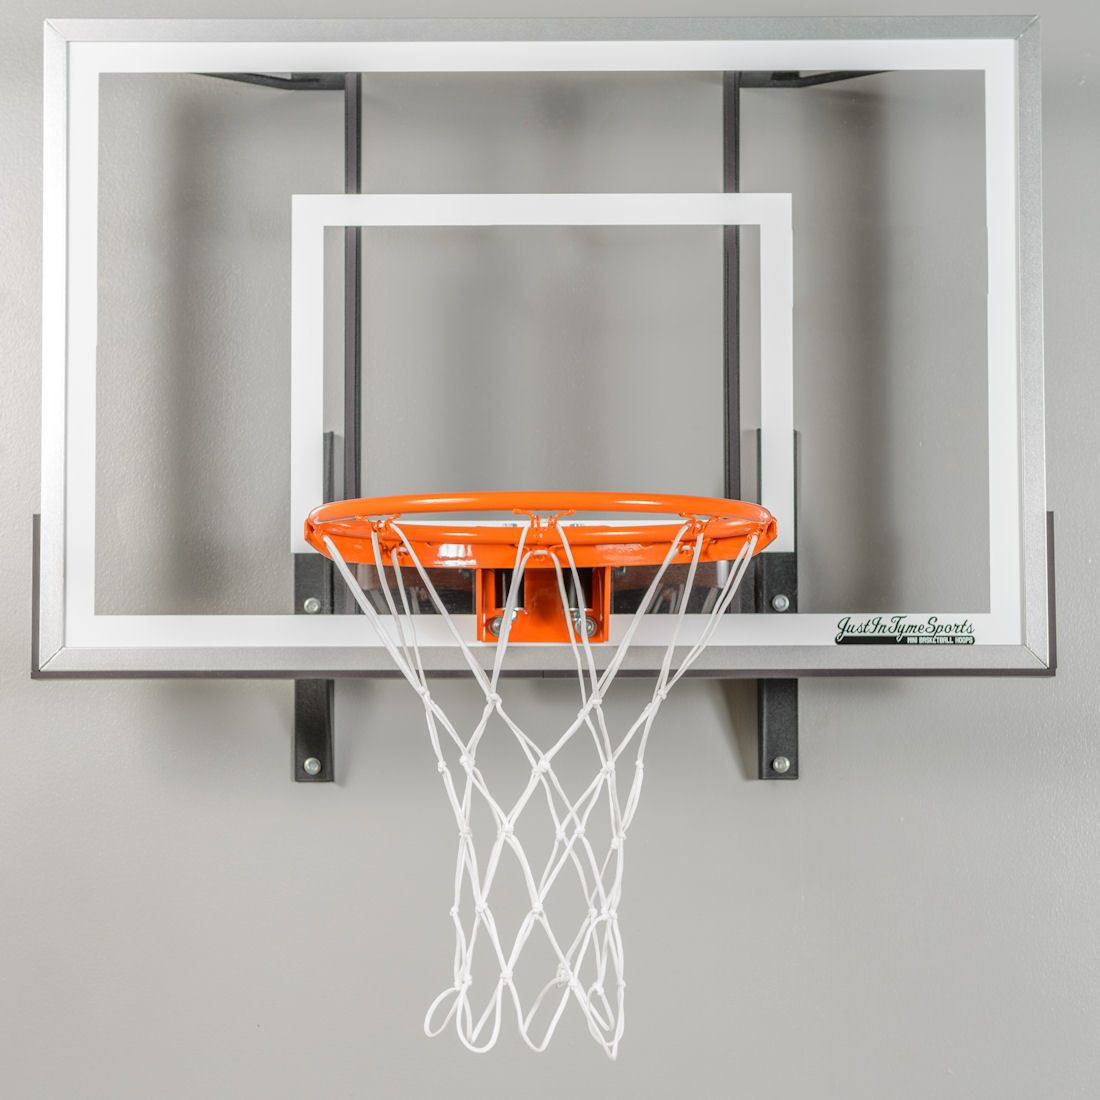 Basketball Hoop For Kids Room
 2018 Basketball Hoop For Kids Room Ideas For Decorating A